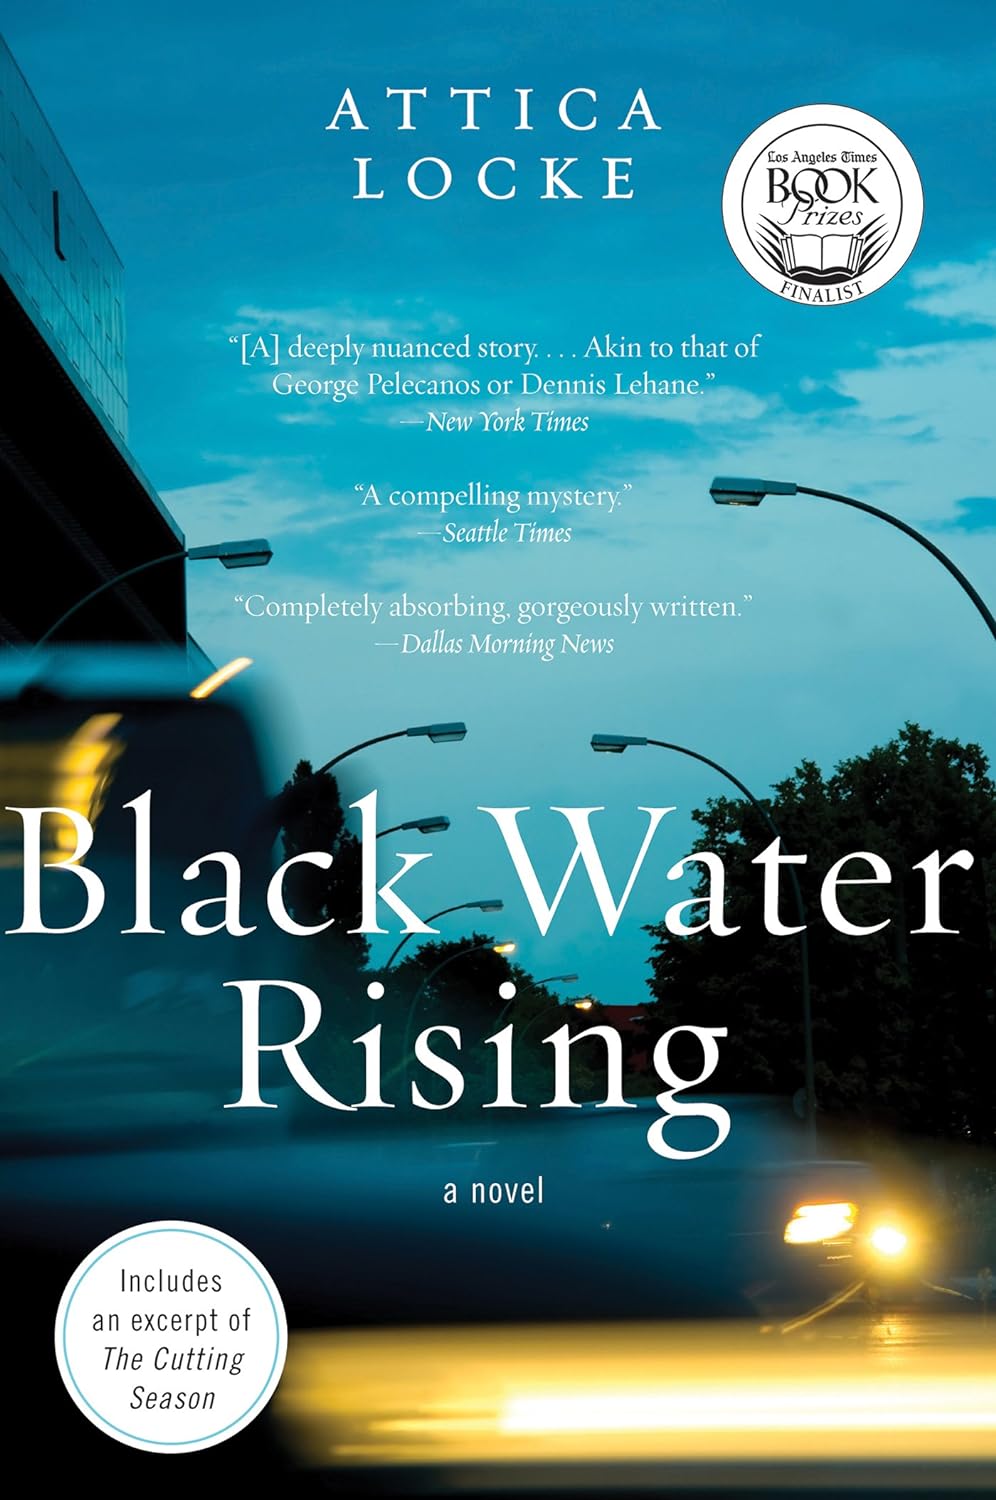 "Black Water Rising"